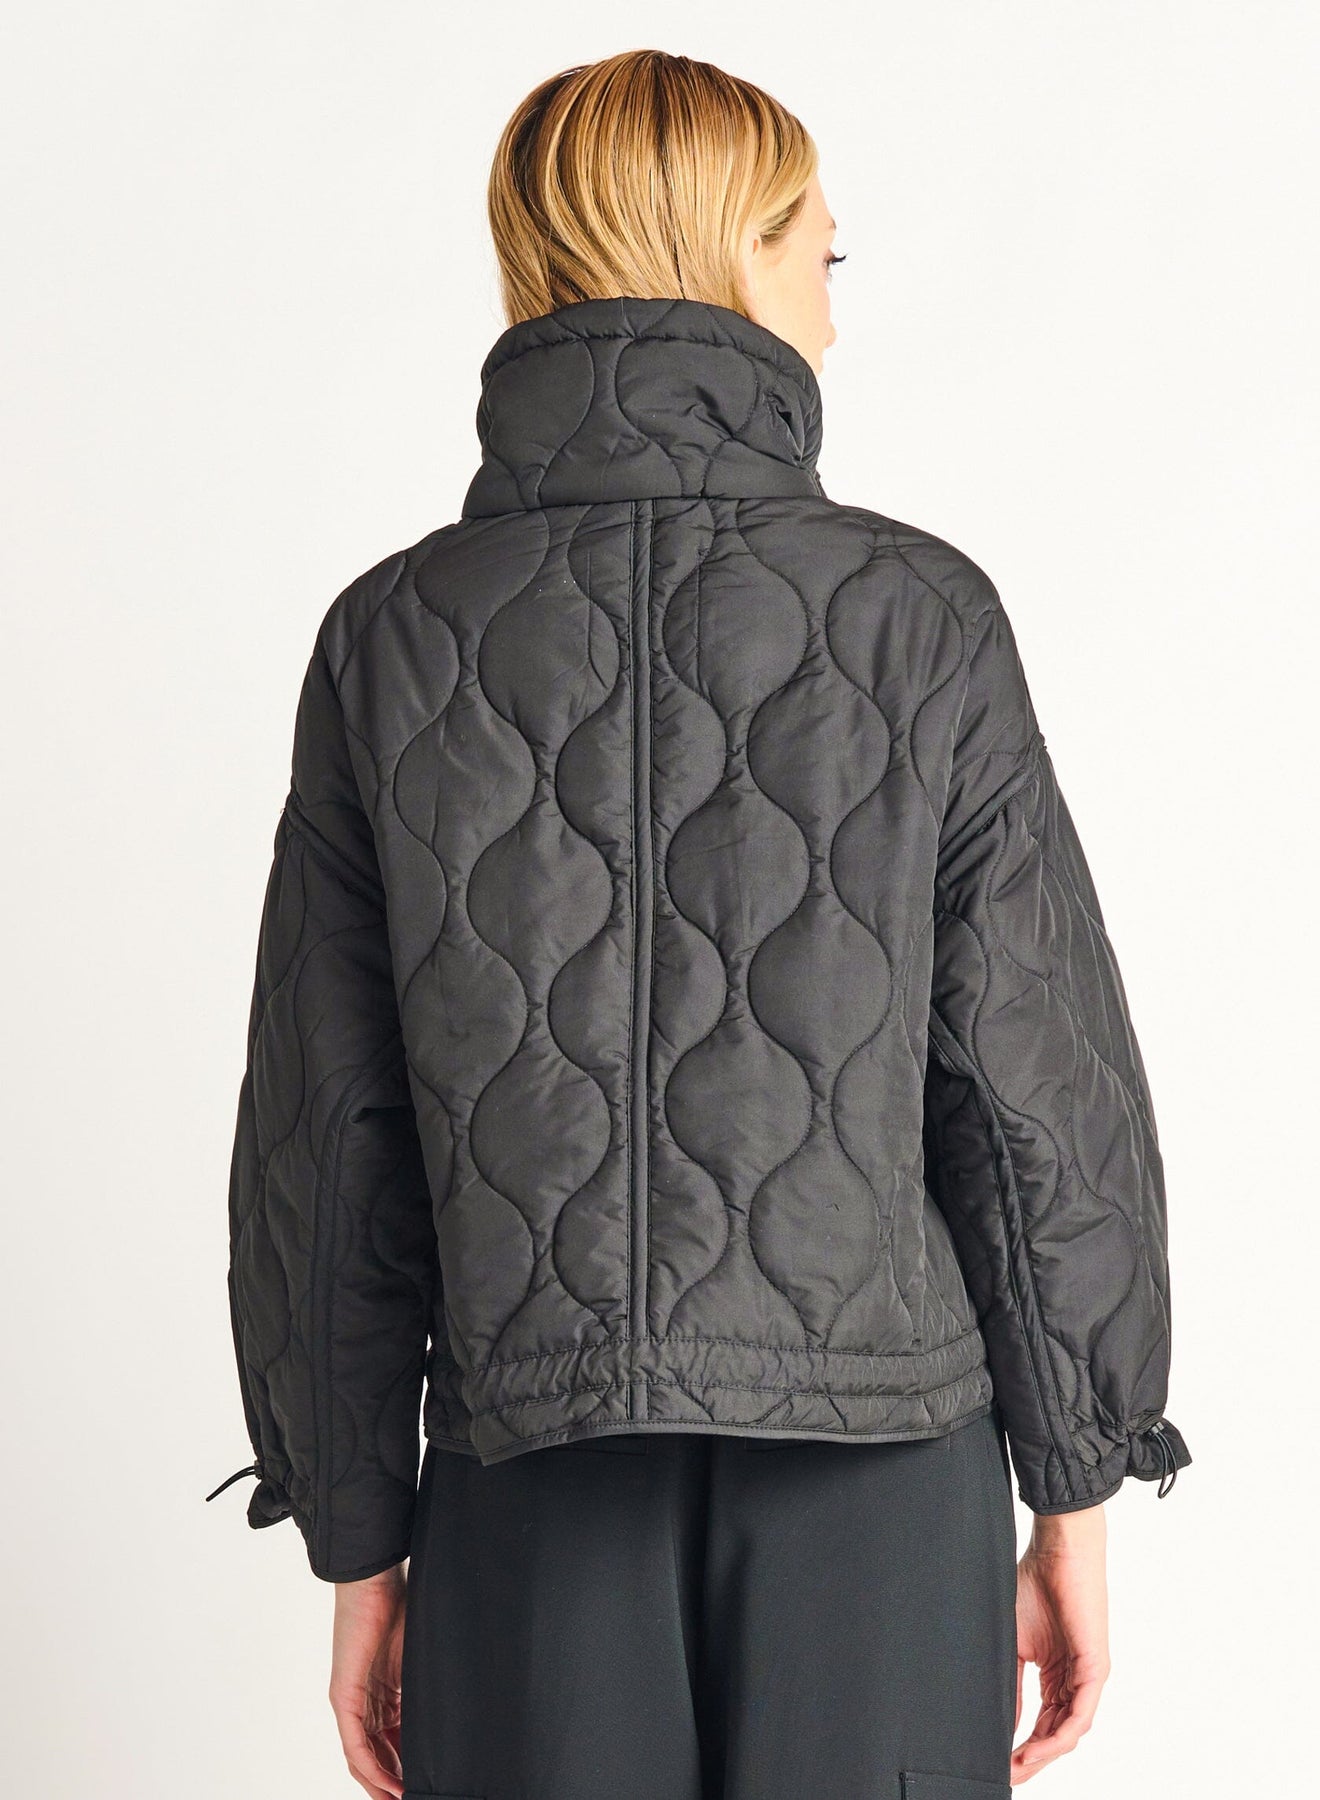 Brand New / Unworn - Louis Vuitton Viscose Floral Print Light Jacket